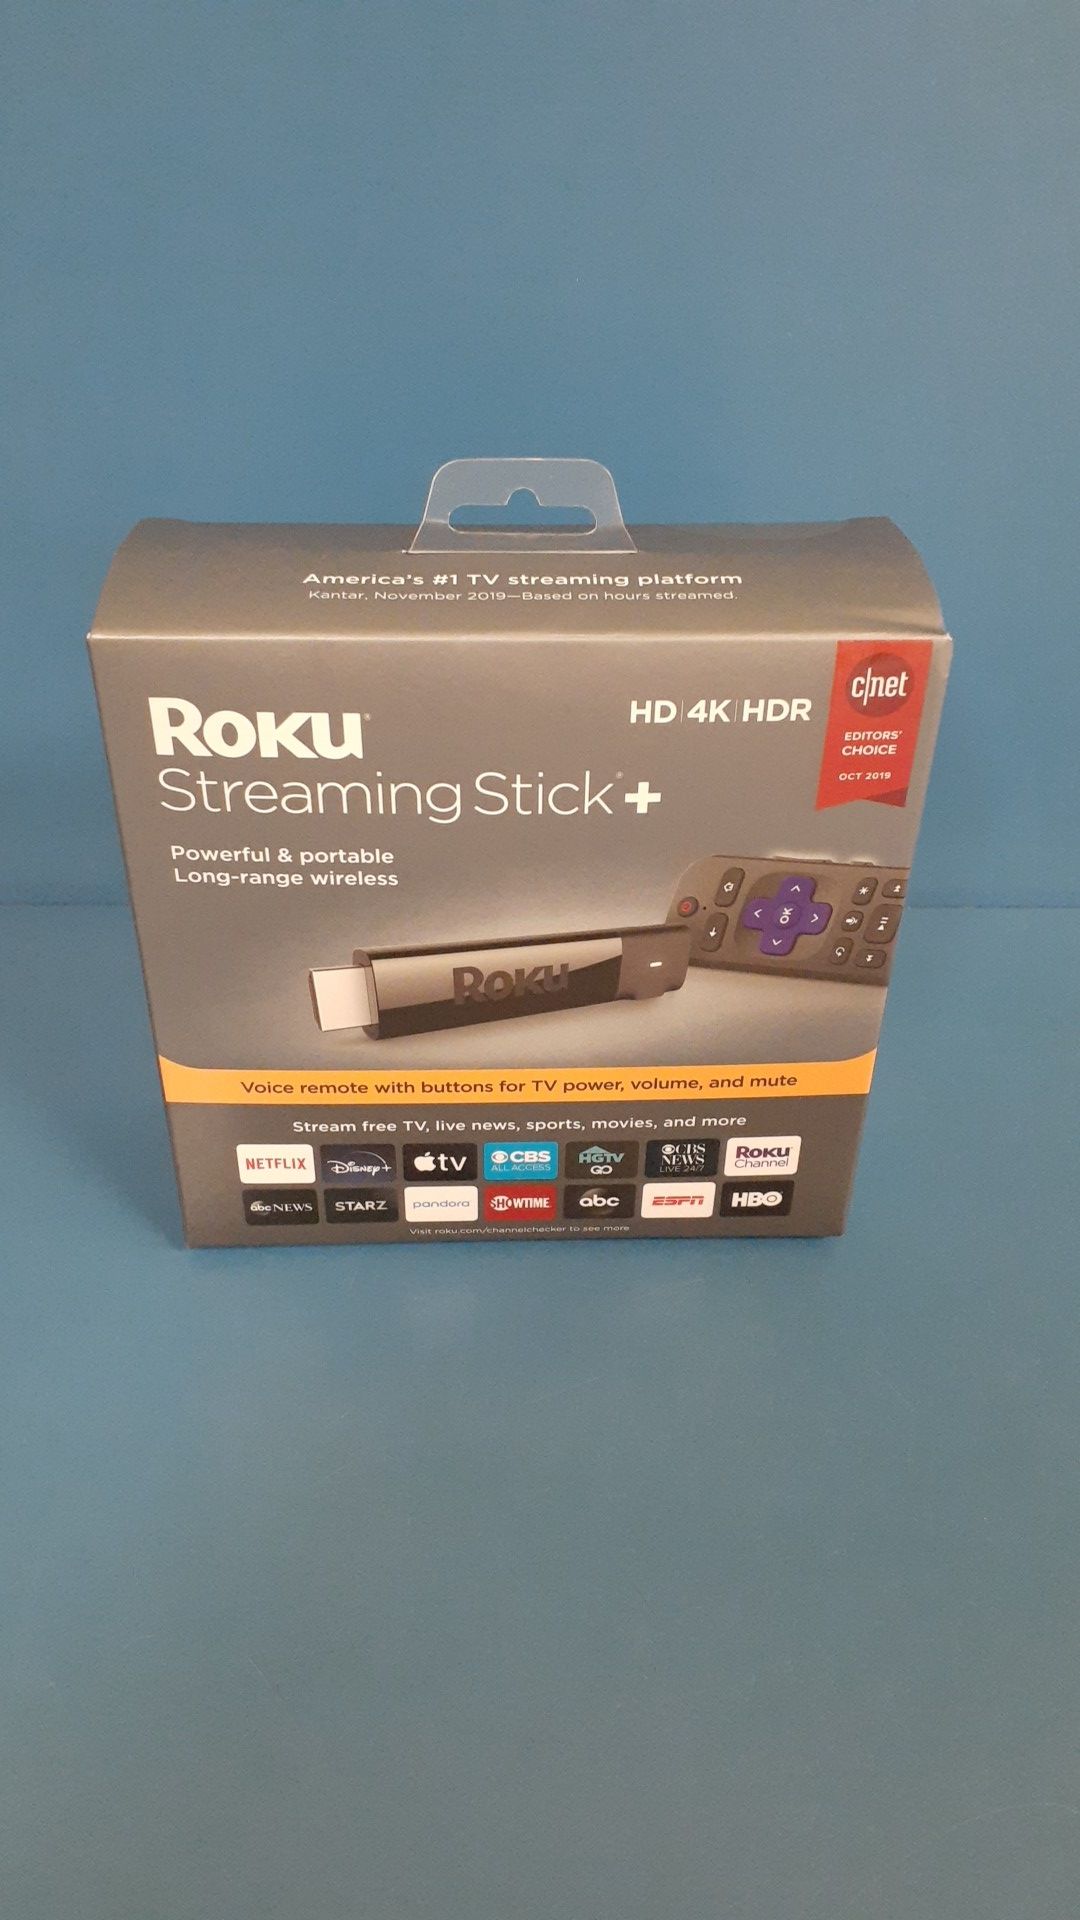 Roku Streaming Stick Plus powerful and portable long range Wireless